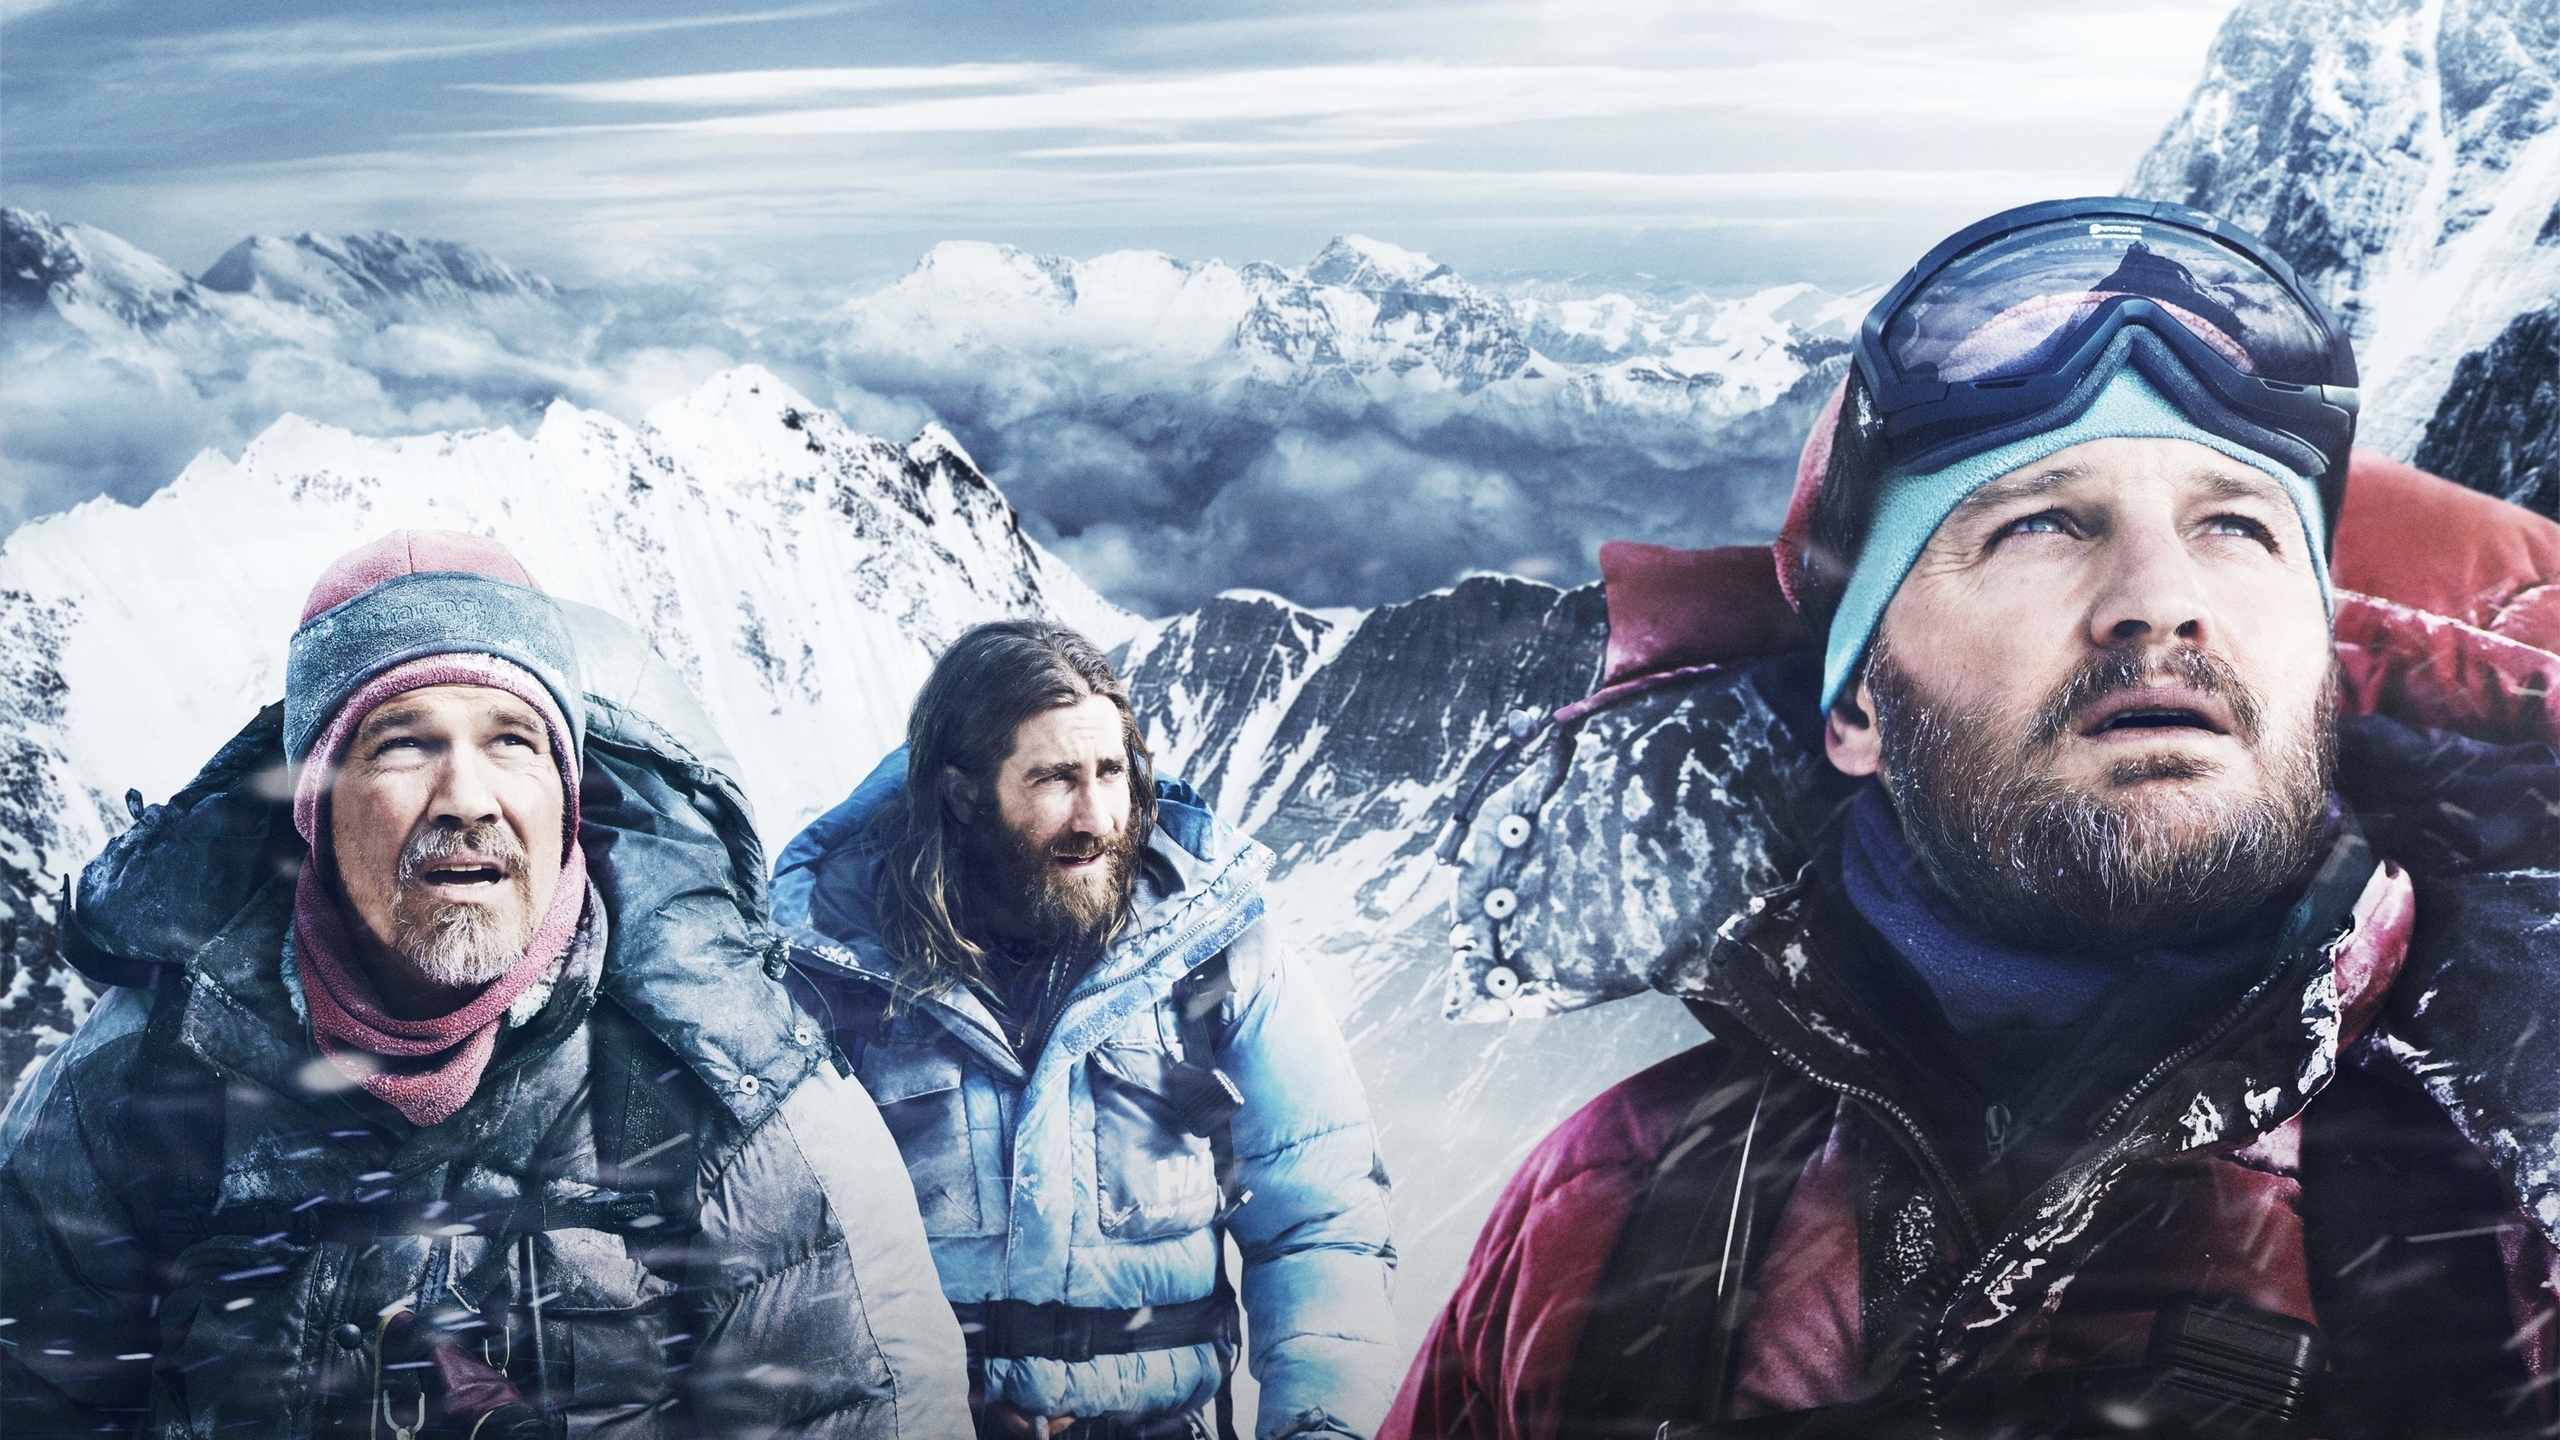 Everest Movie Poster for 2560x1440 HDTV resolution